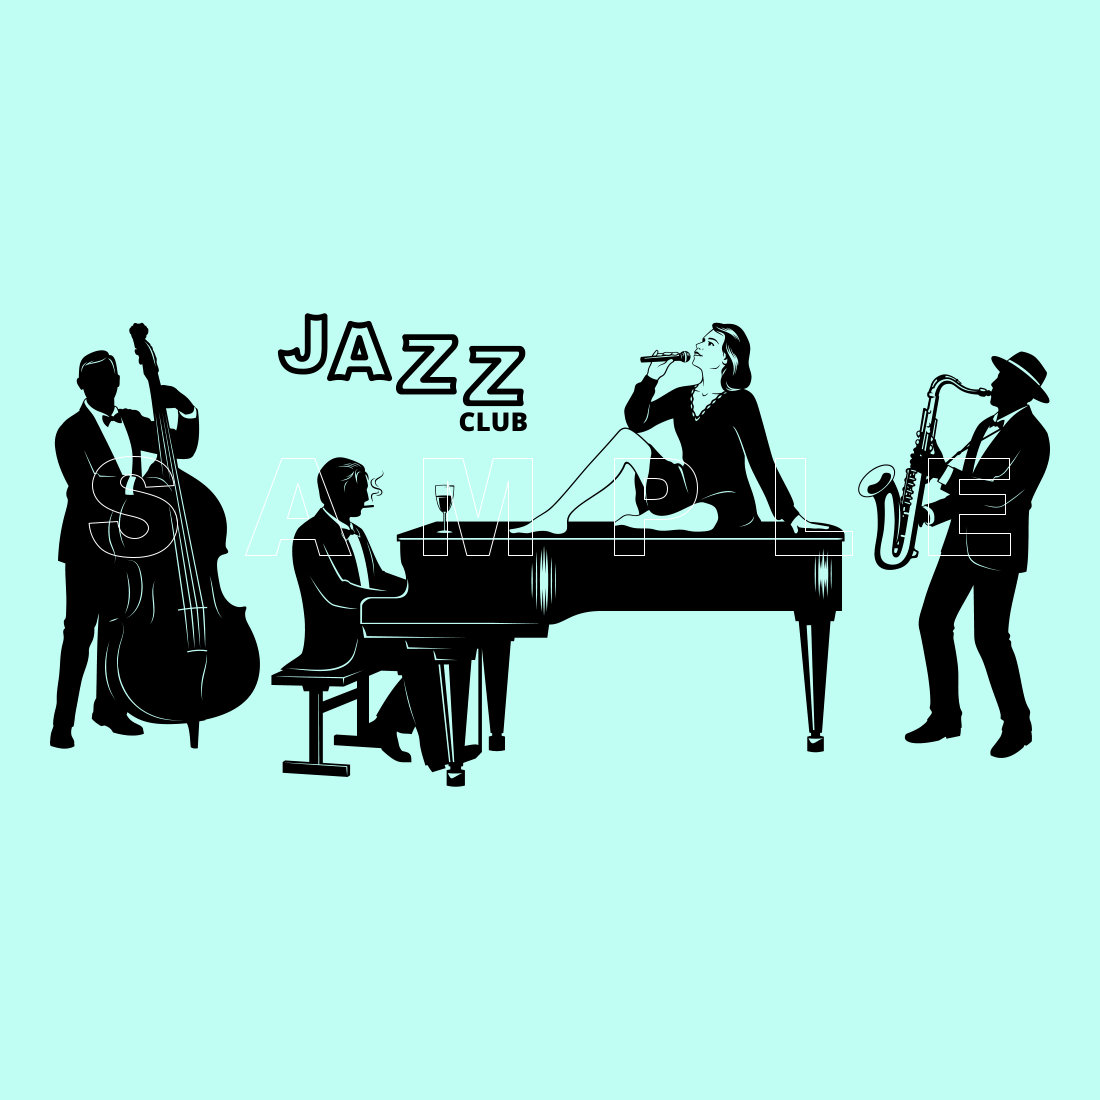 Jazz Quartet Silhouettes preview image.